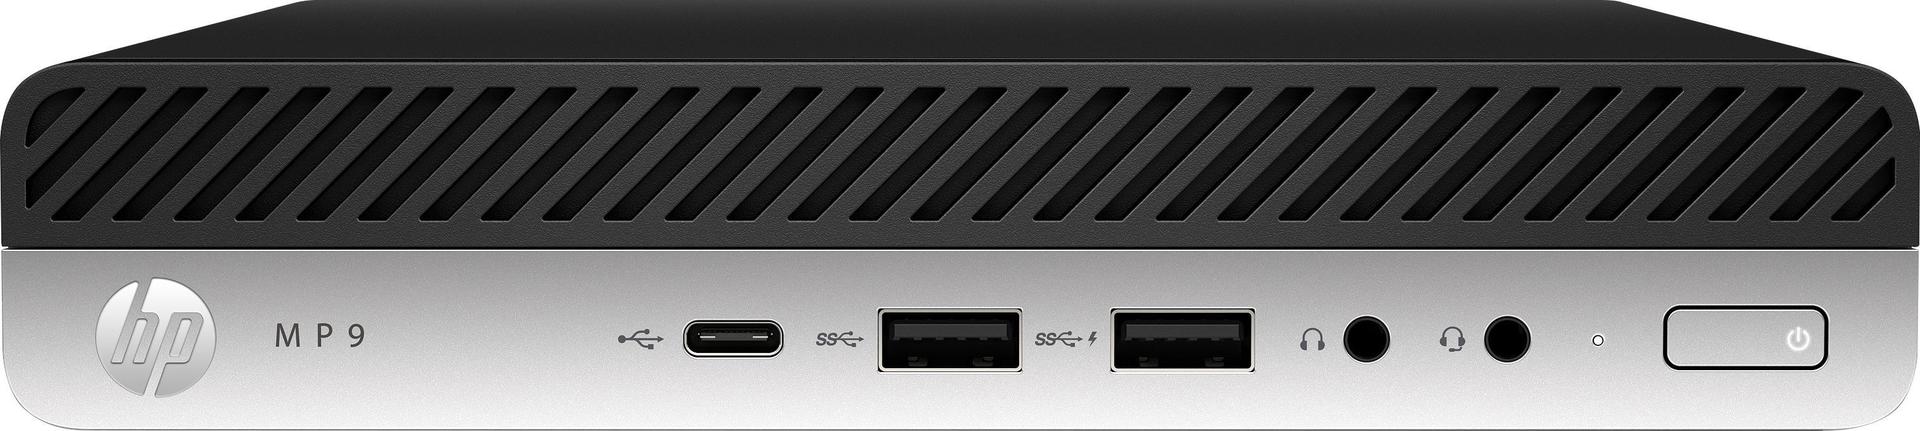 HP Retail System MP9 G4 - Mini Desktop - 1 x Core i5 8500T / 2,1 GHz - RAM 8GB - SSD 256GB - 3D V-NAND technology - UHD Graphics 630 - GigE, Bluetooth 5,0 - WLAN: 802,11a/b/g/n/ac, Bluetooth 5,0 - Win 10 IoT Enterprise 2016 LTSB 64-bit - Monitor: keiner -